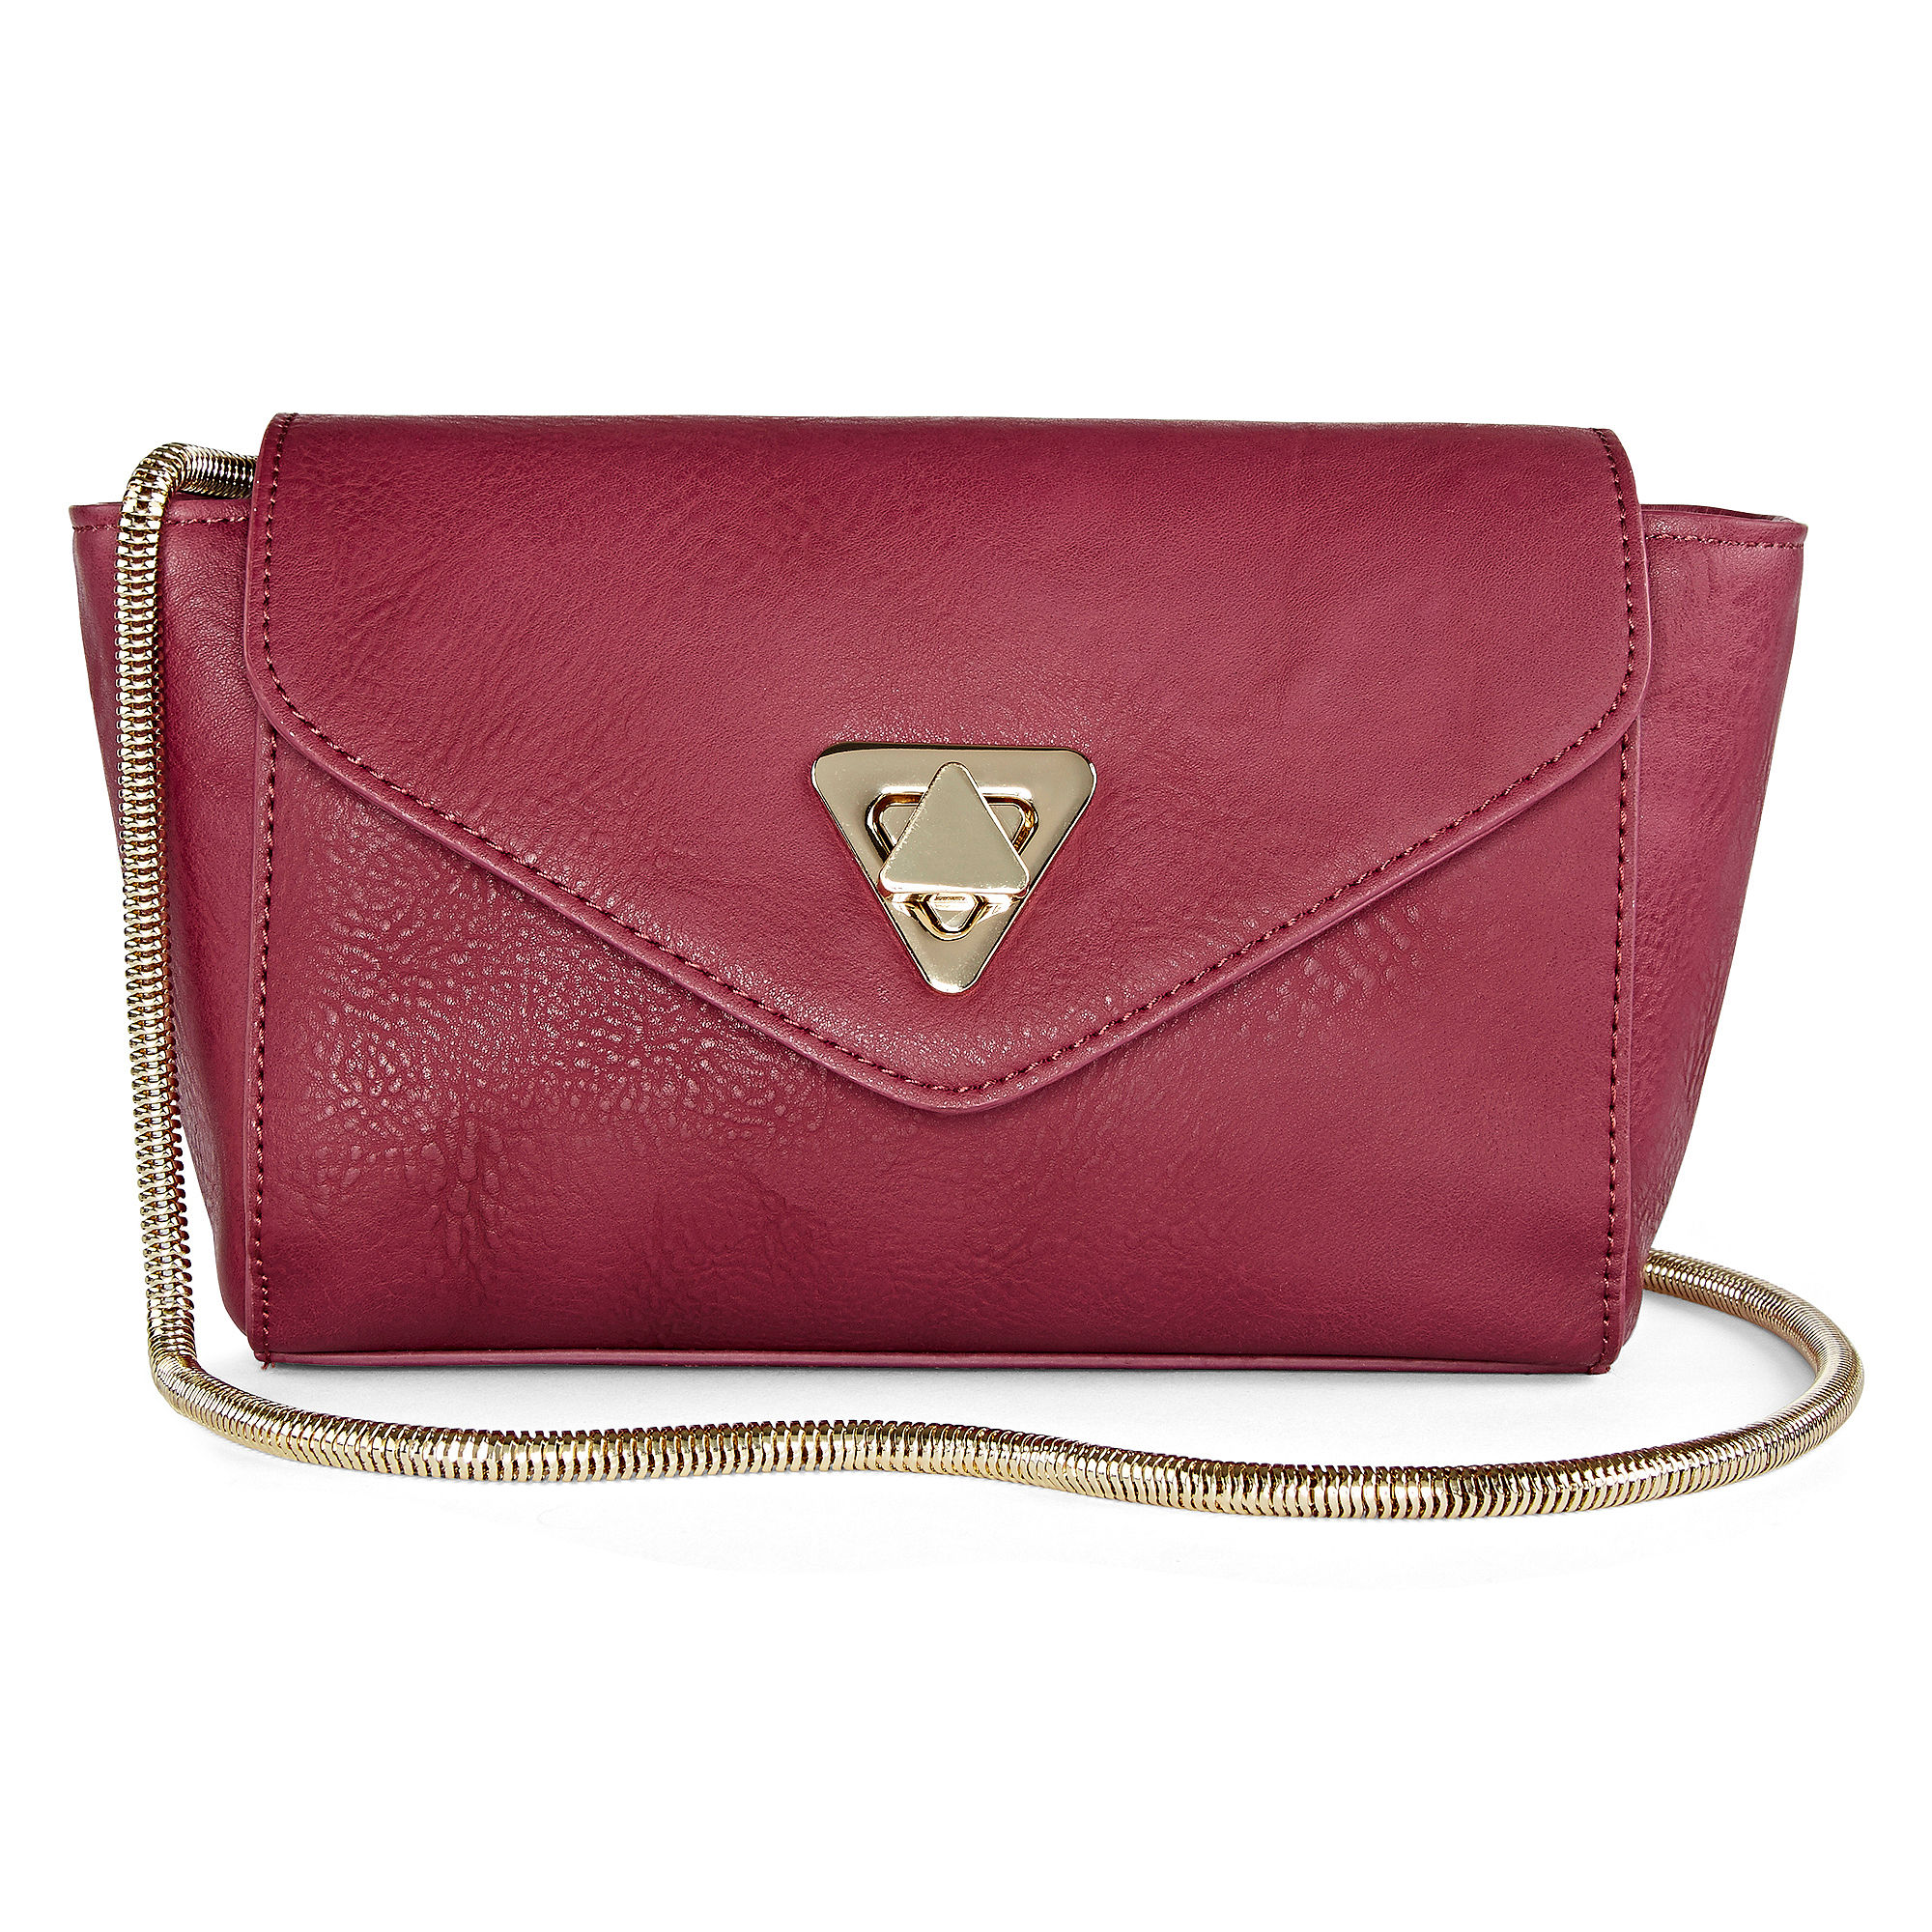 Handbags | Purses | Clutches | Women's Baga | Plus Size Now